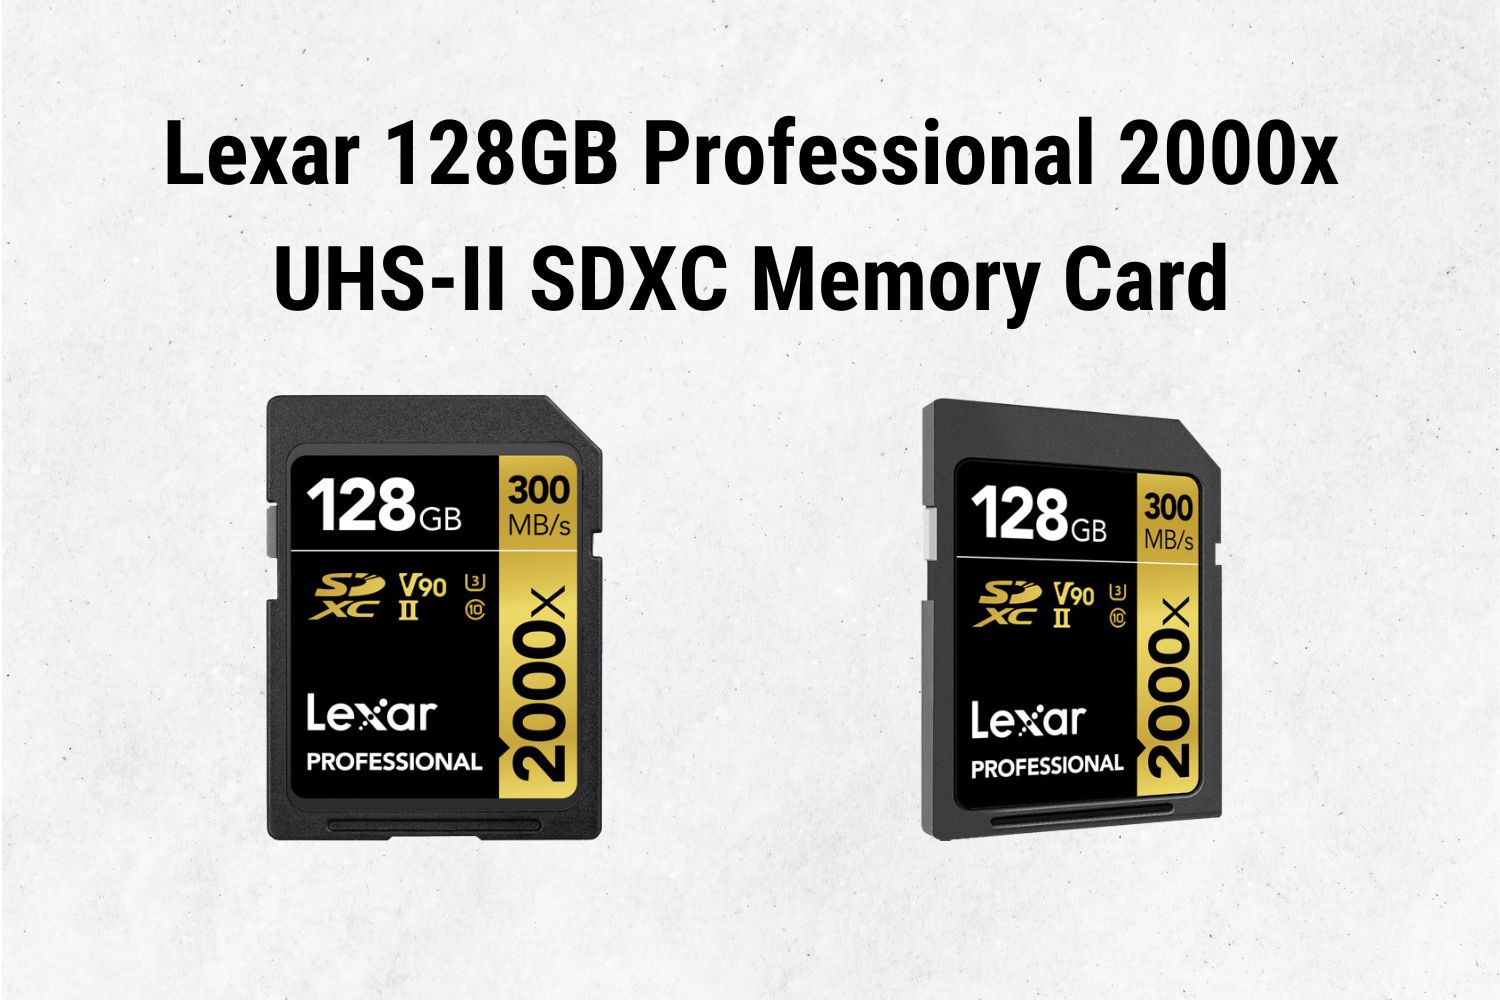 Lexar 128GB Professional 2000x UHS-II SDXC Memory Card